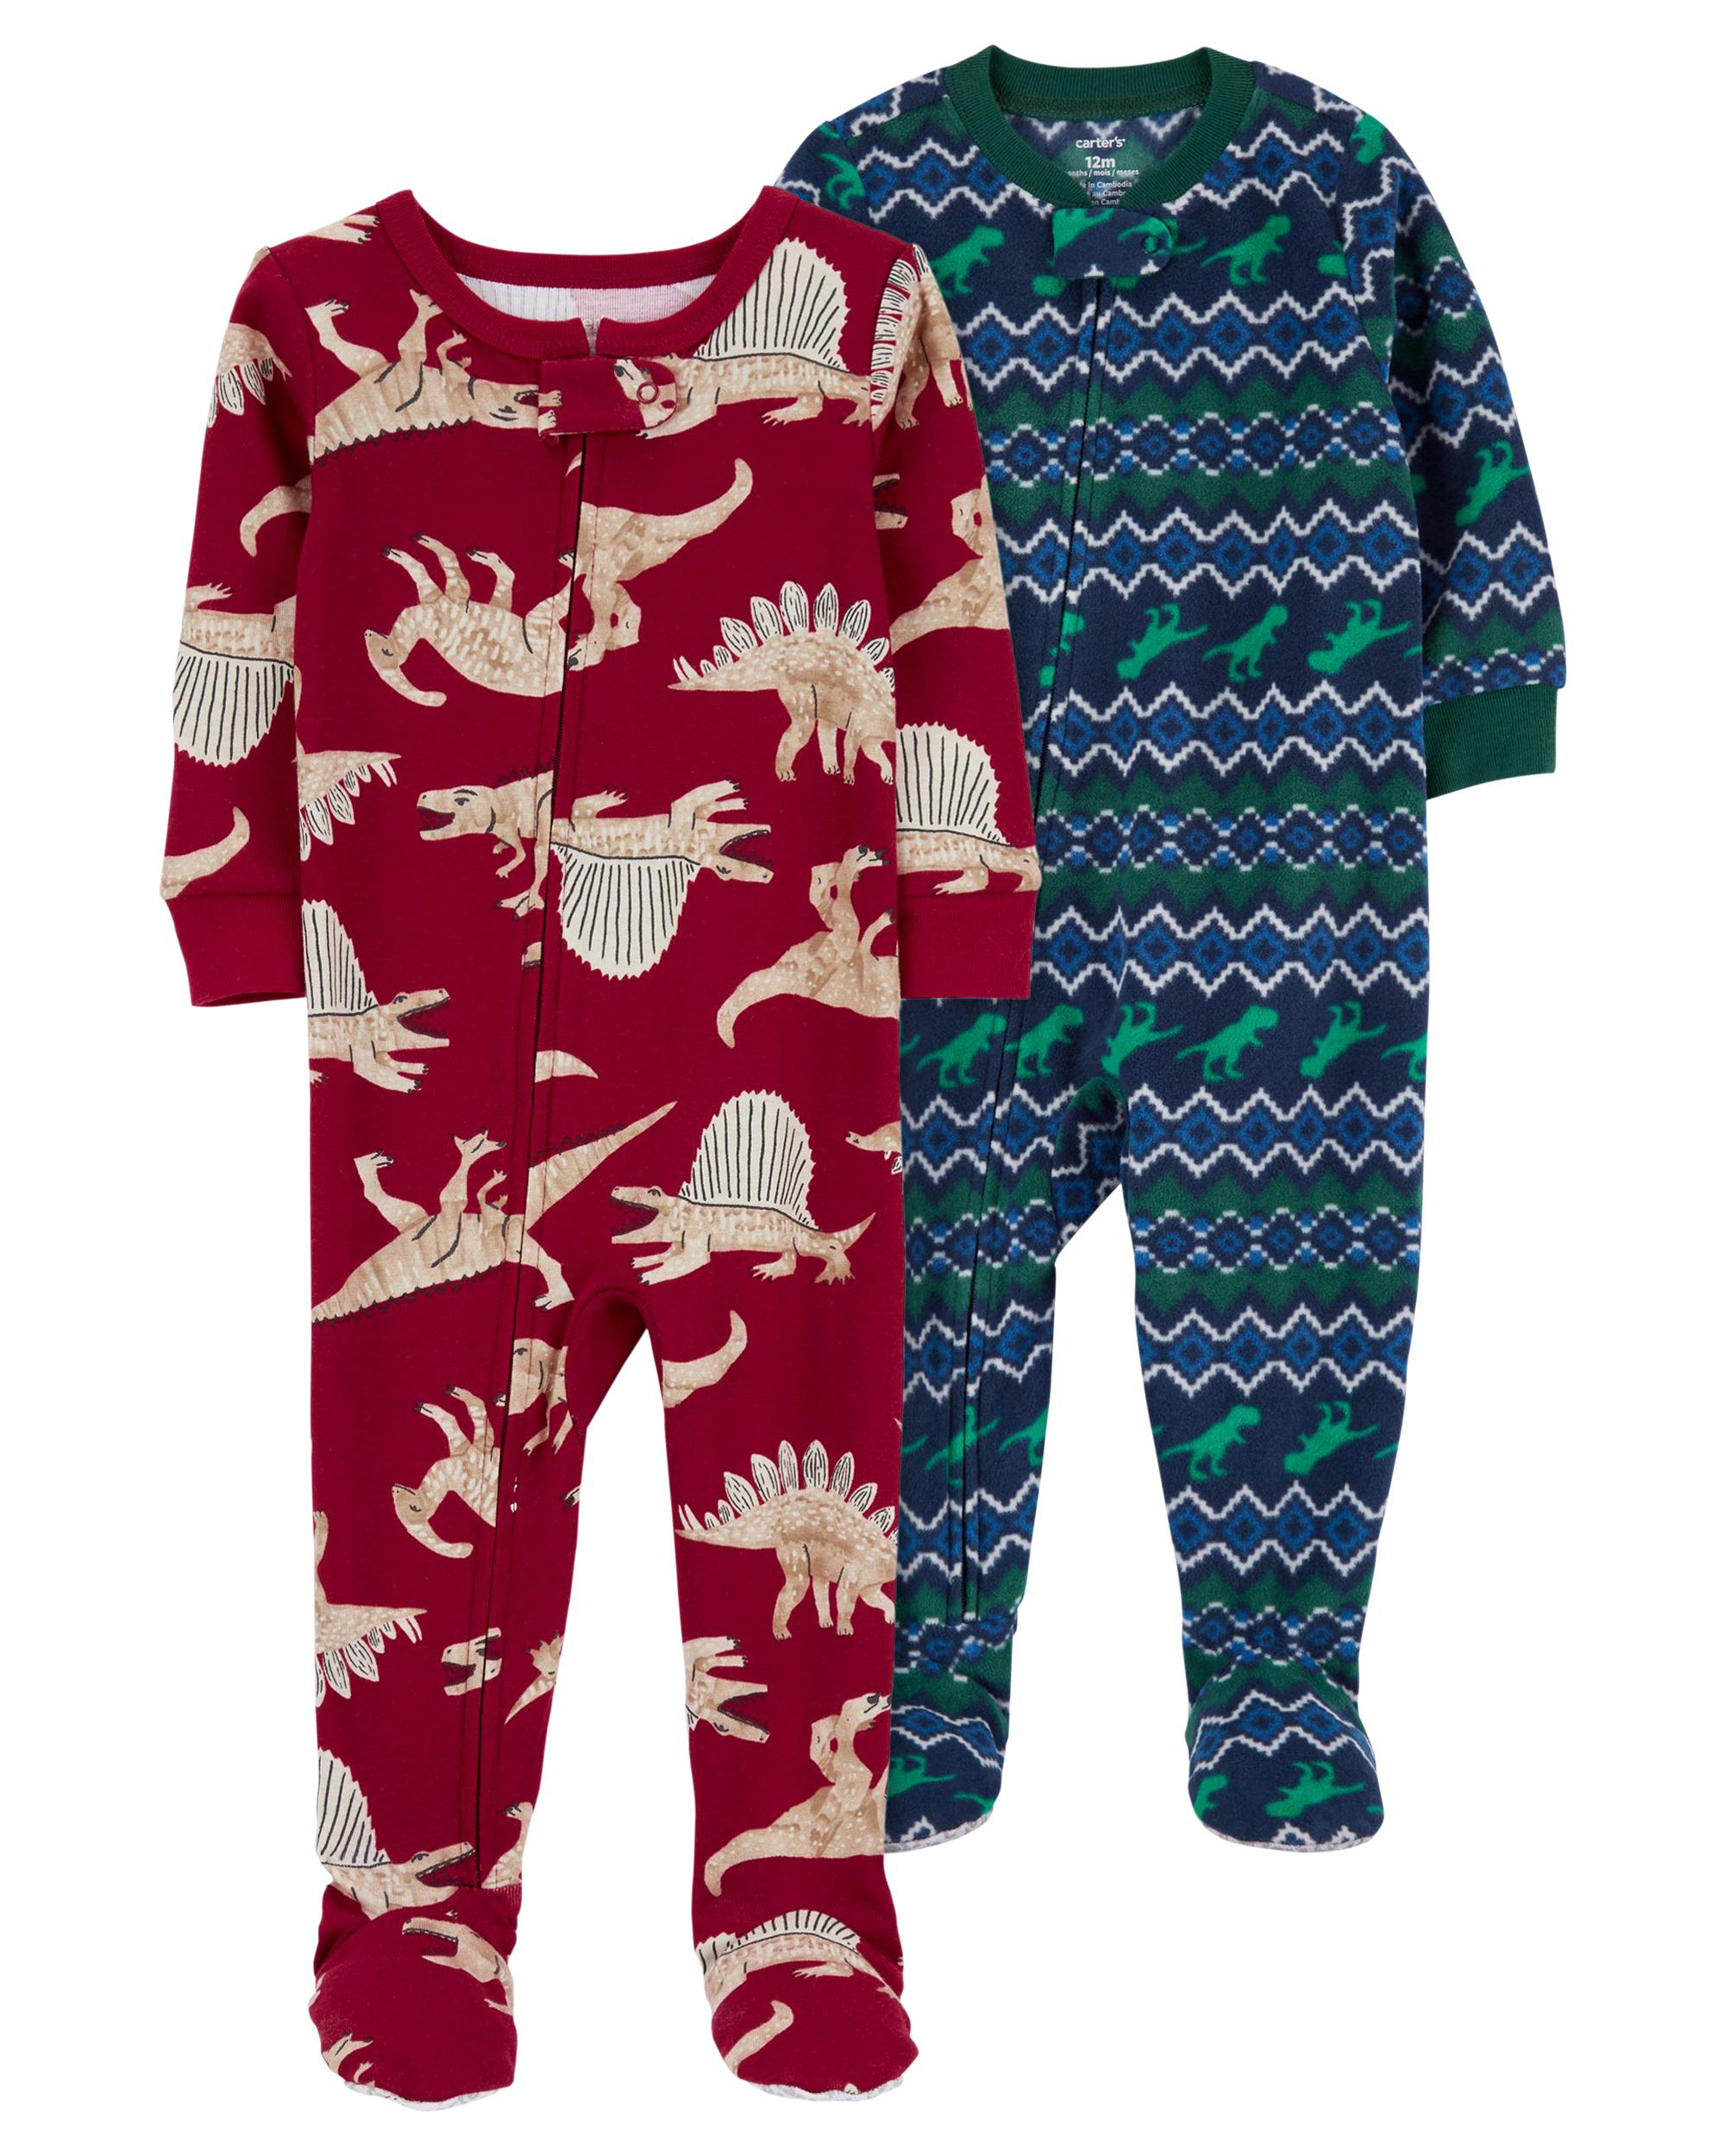 Baby 2-Pack Footie 1-Piece Pyjamas Set